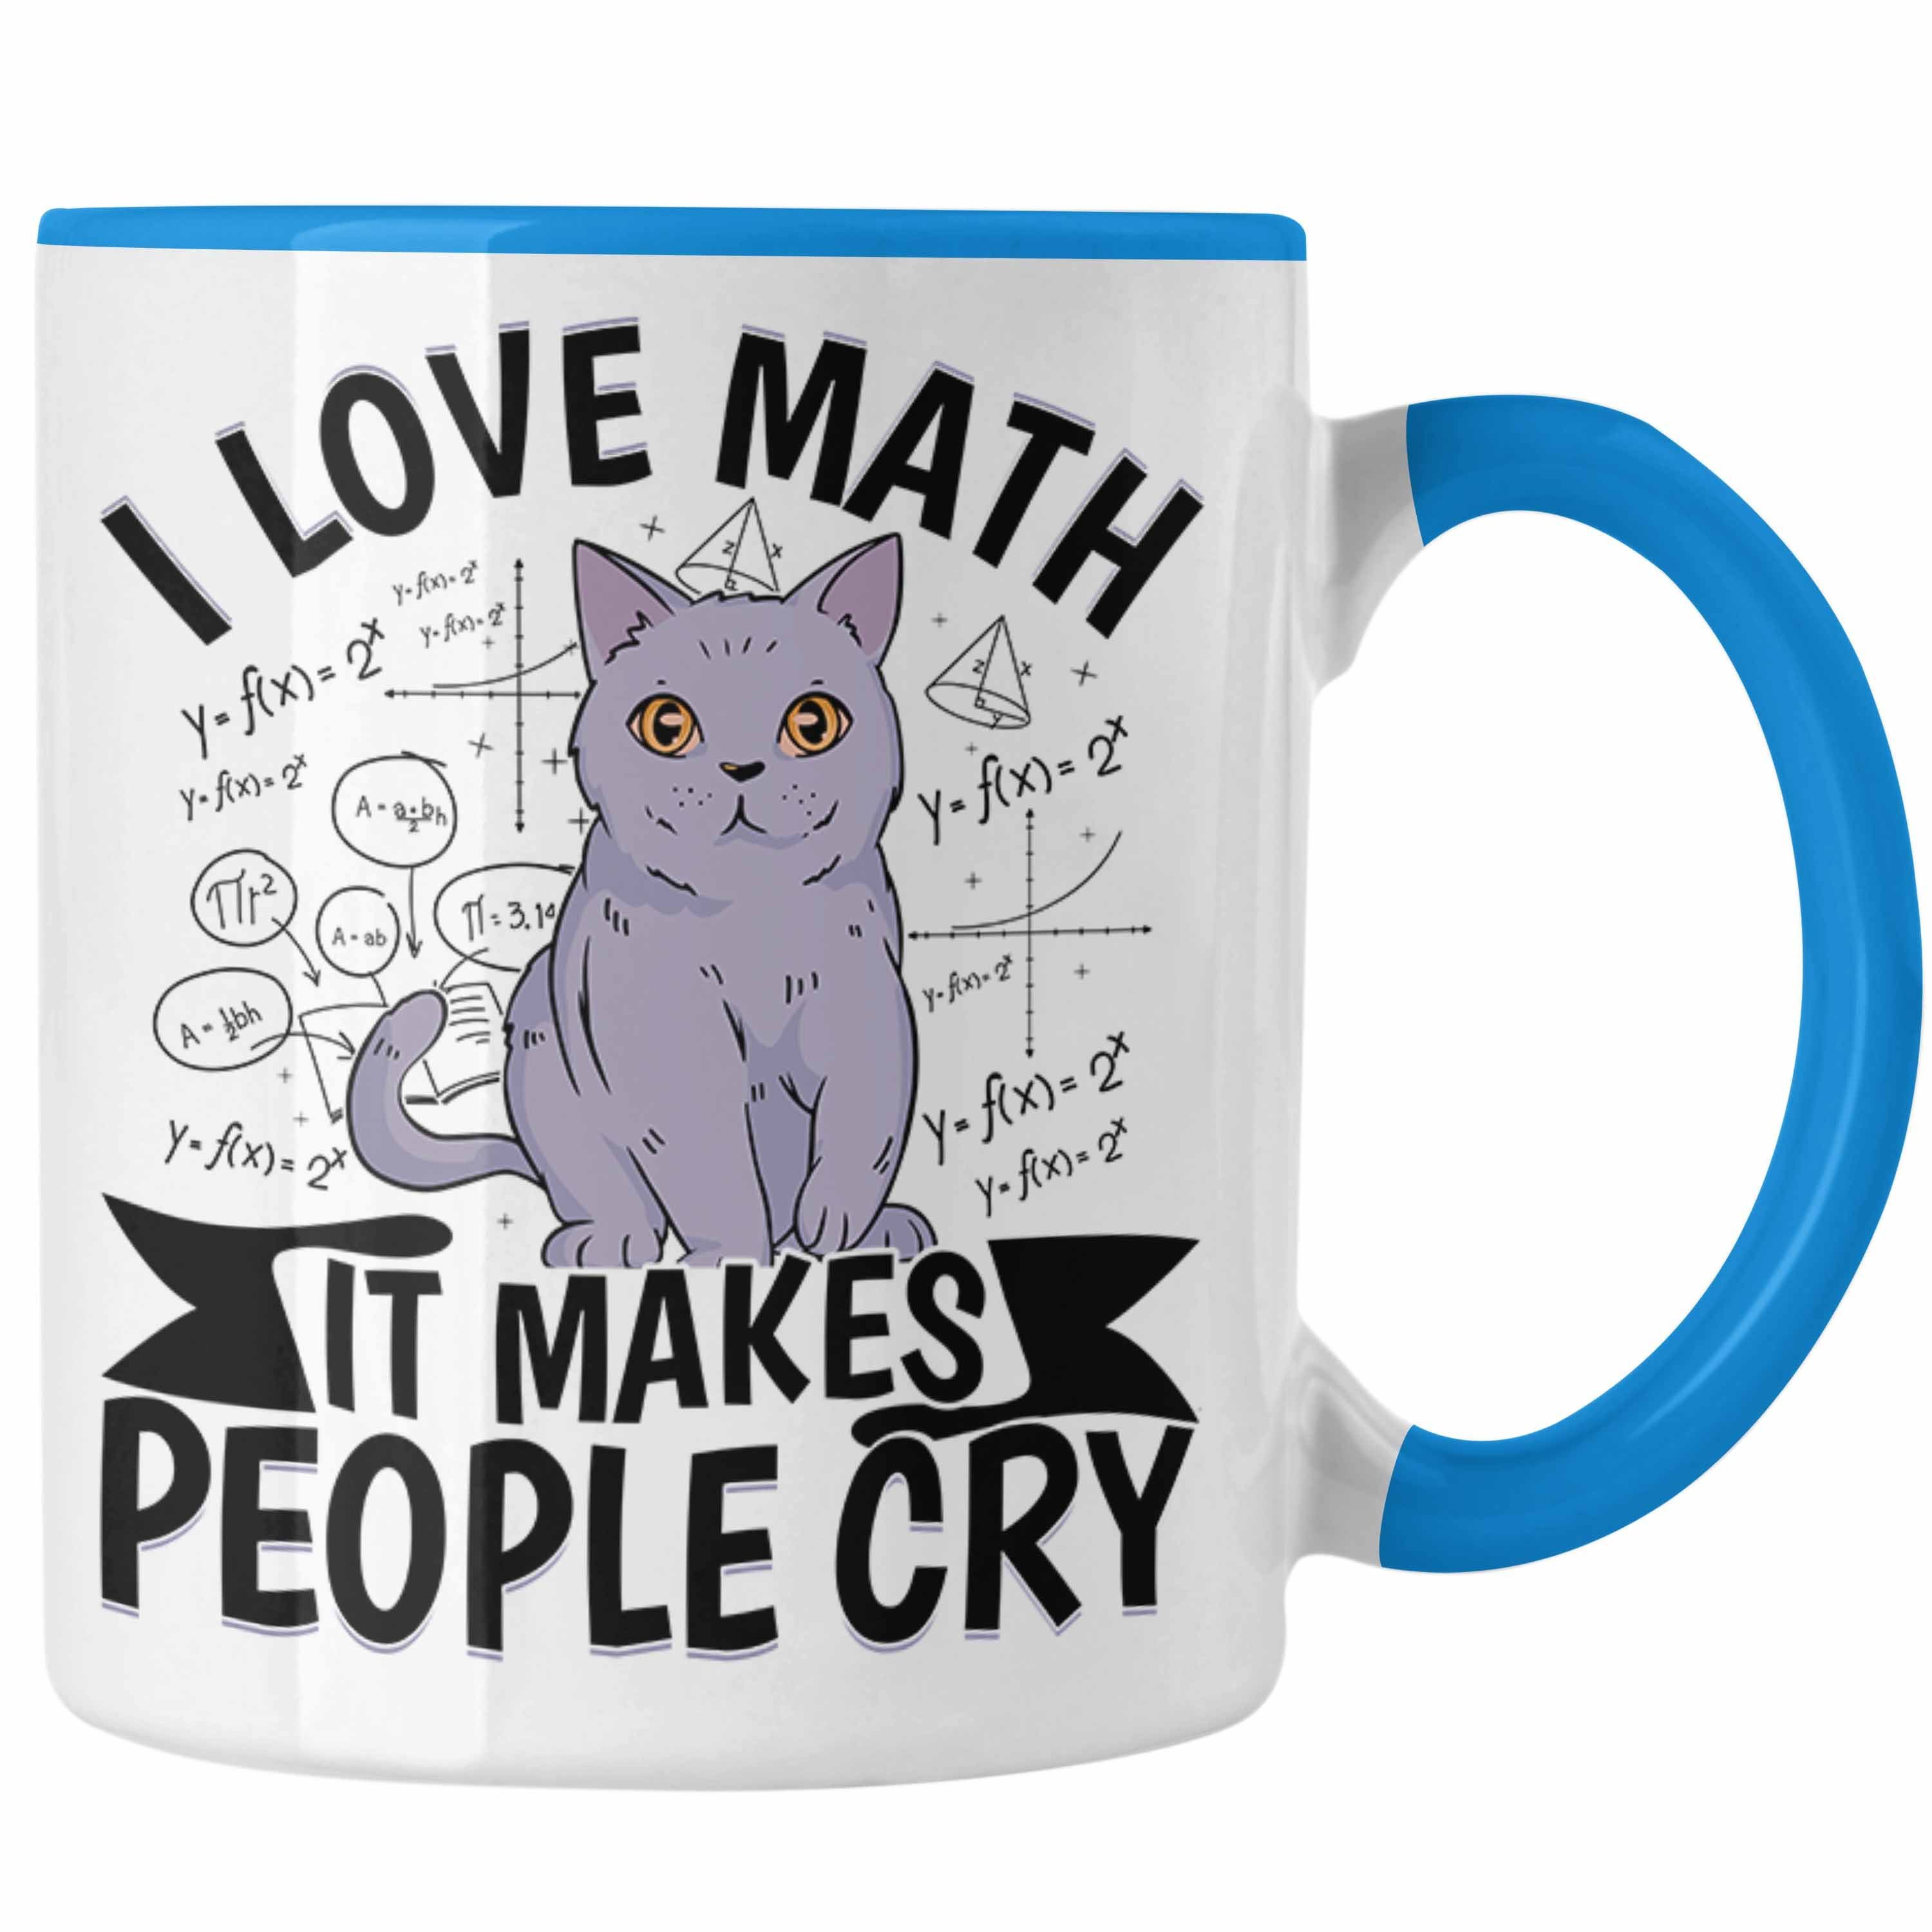 Trendation Tasse Mathe-Lehrer Tasse Geschenkidee I Love Math It Makes People Cry Mathe Blau